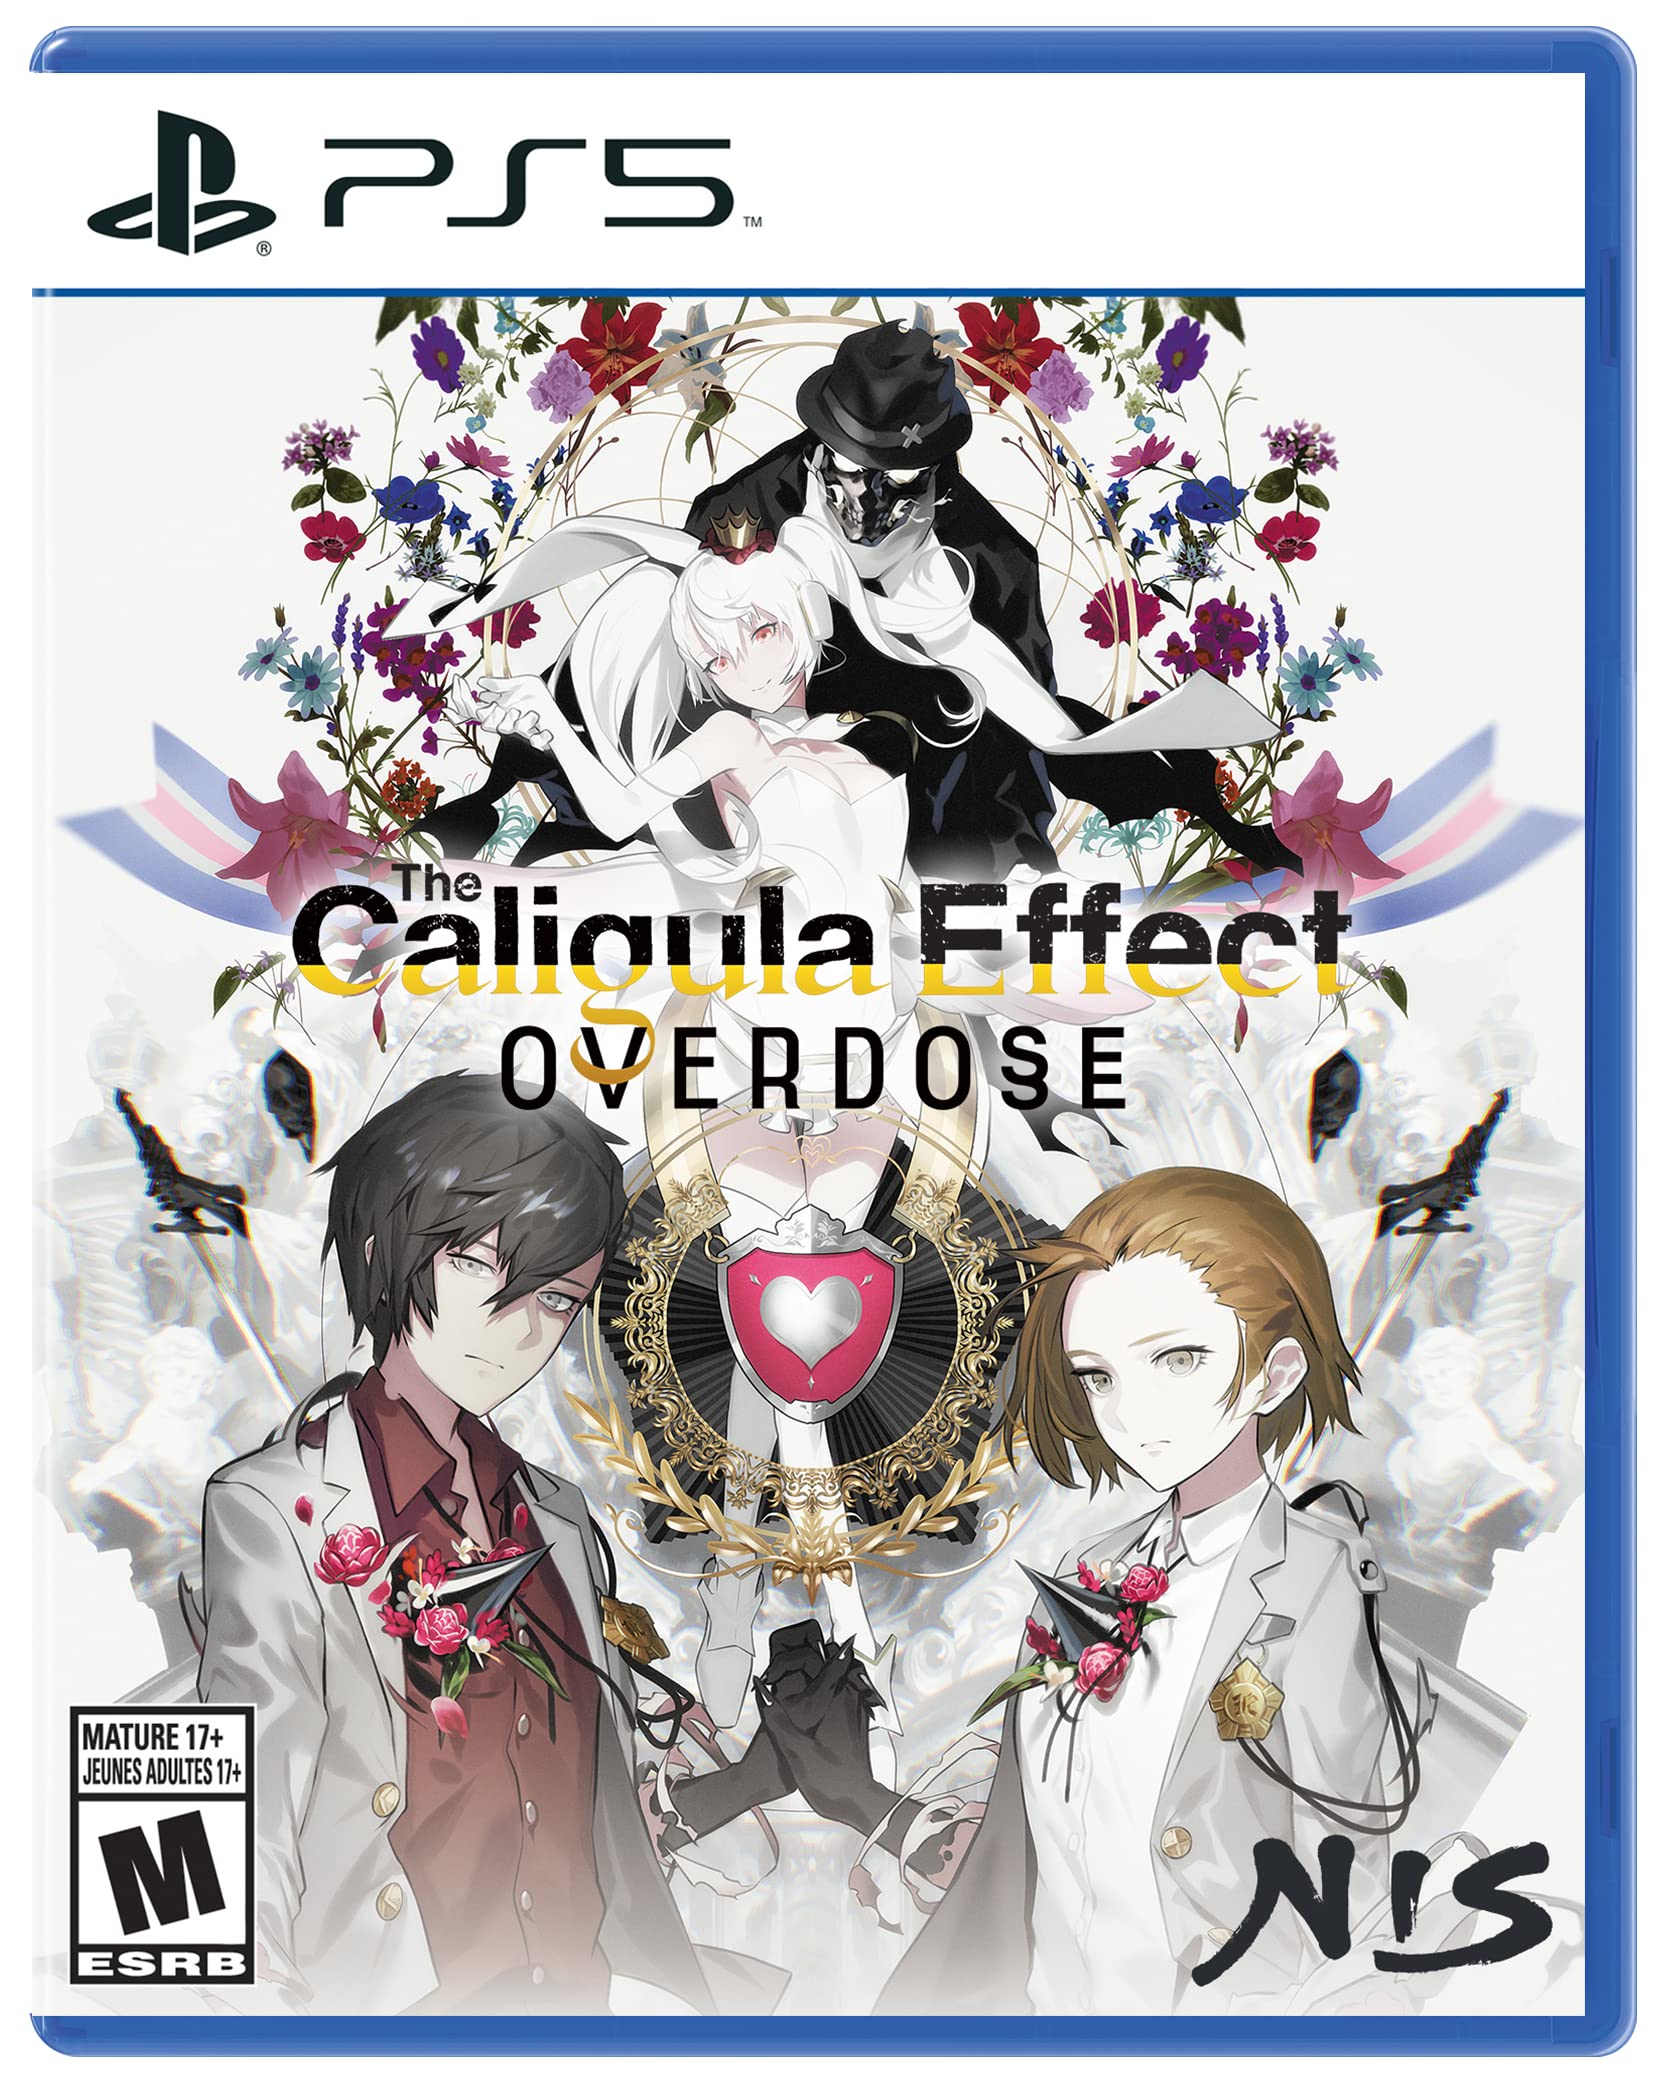 The Caligula Effect: Overdose (͢:) - PS5